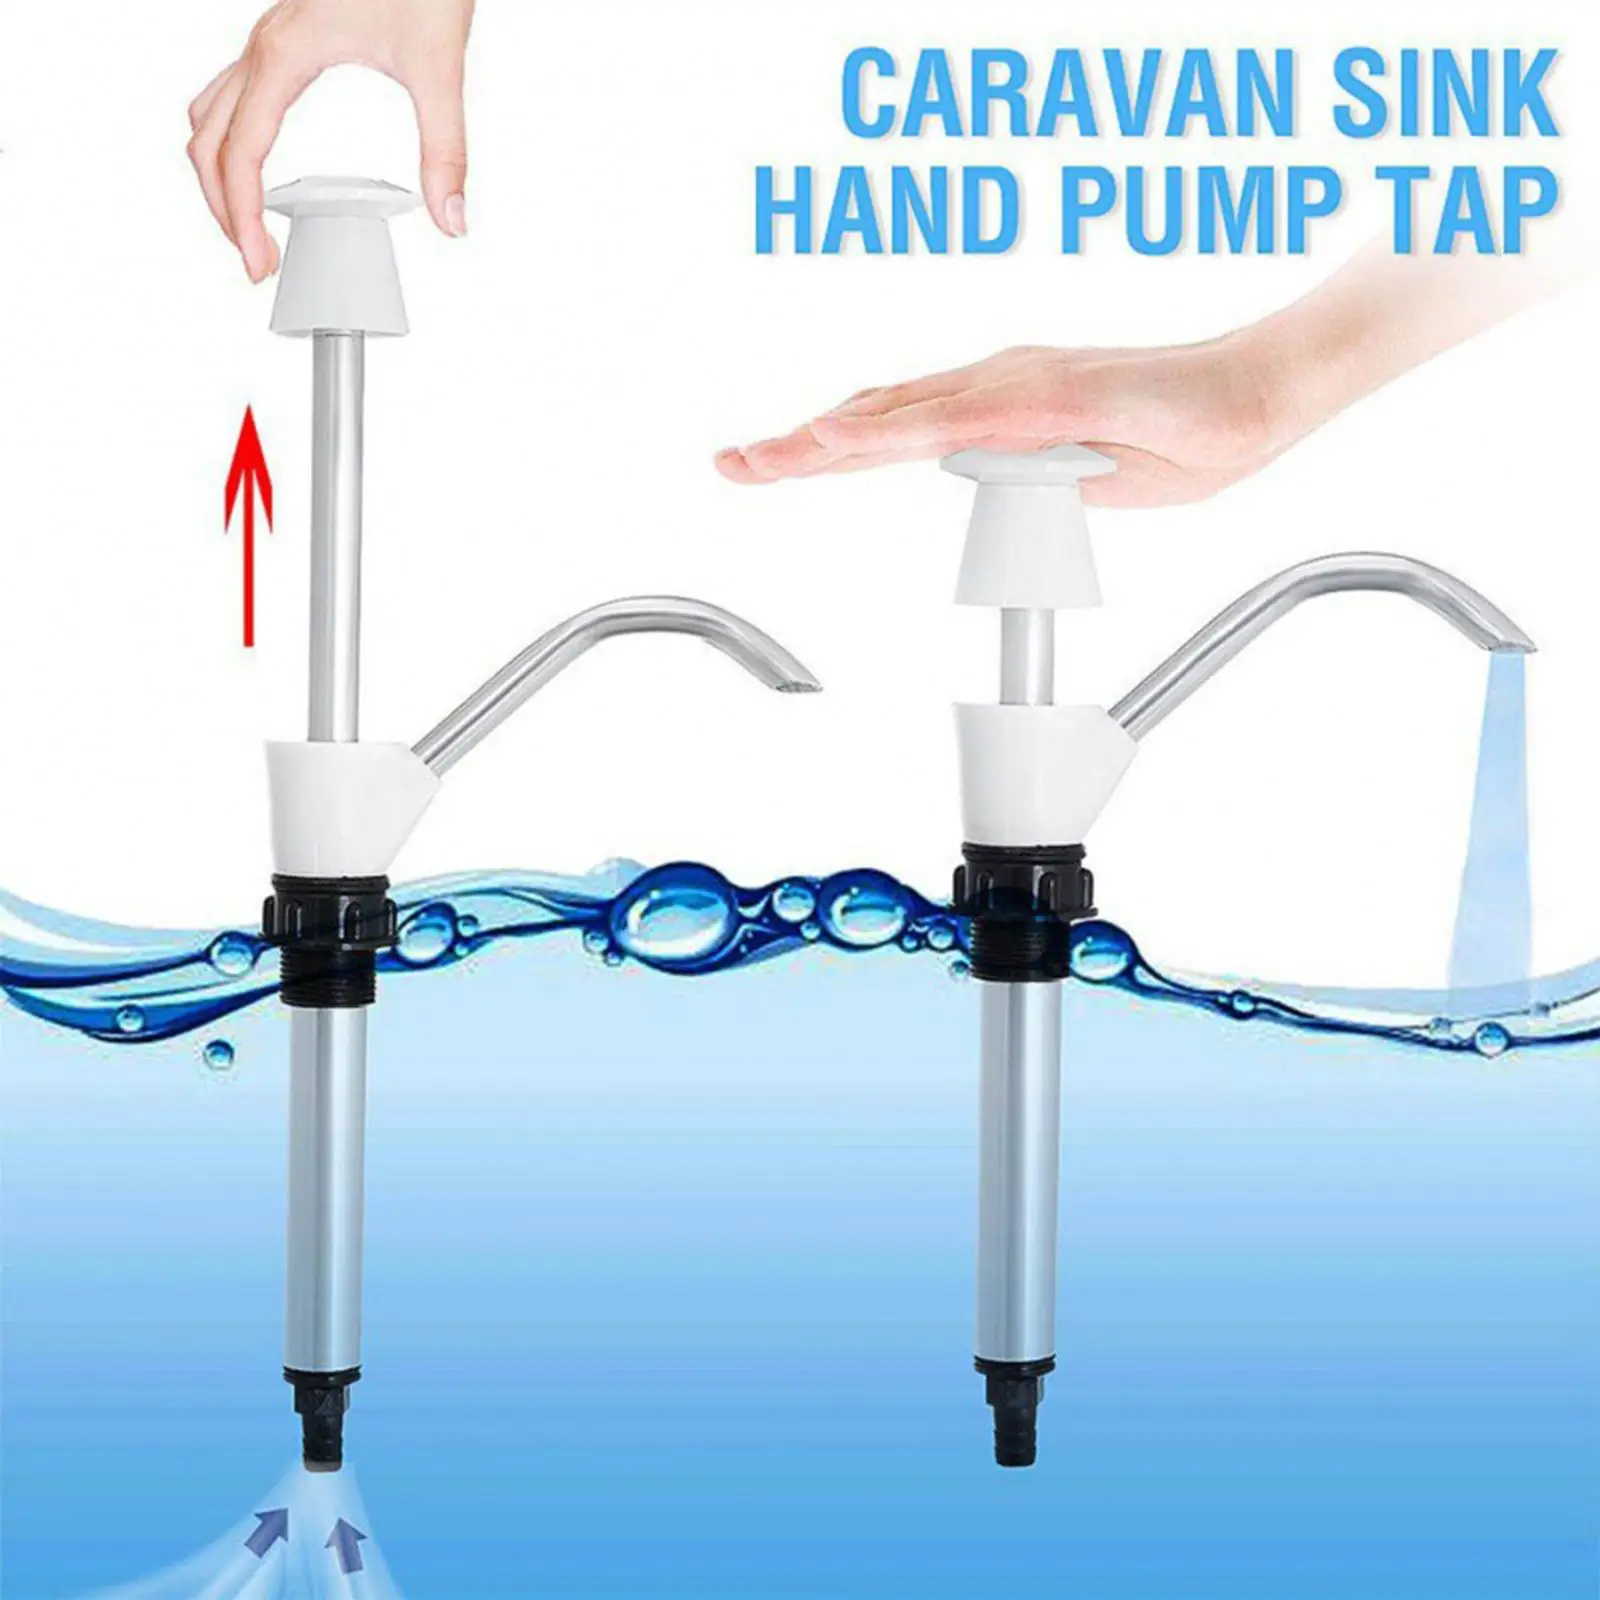 Caravan Sink Water Hand Pump  Faucet Bottled Water Dispenser for Camper Trailer Motorhome Boat RV Supplies